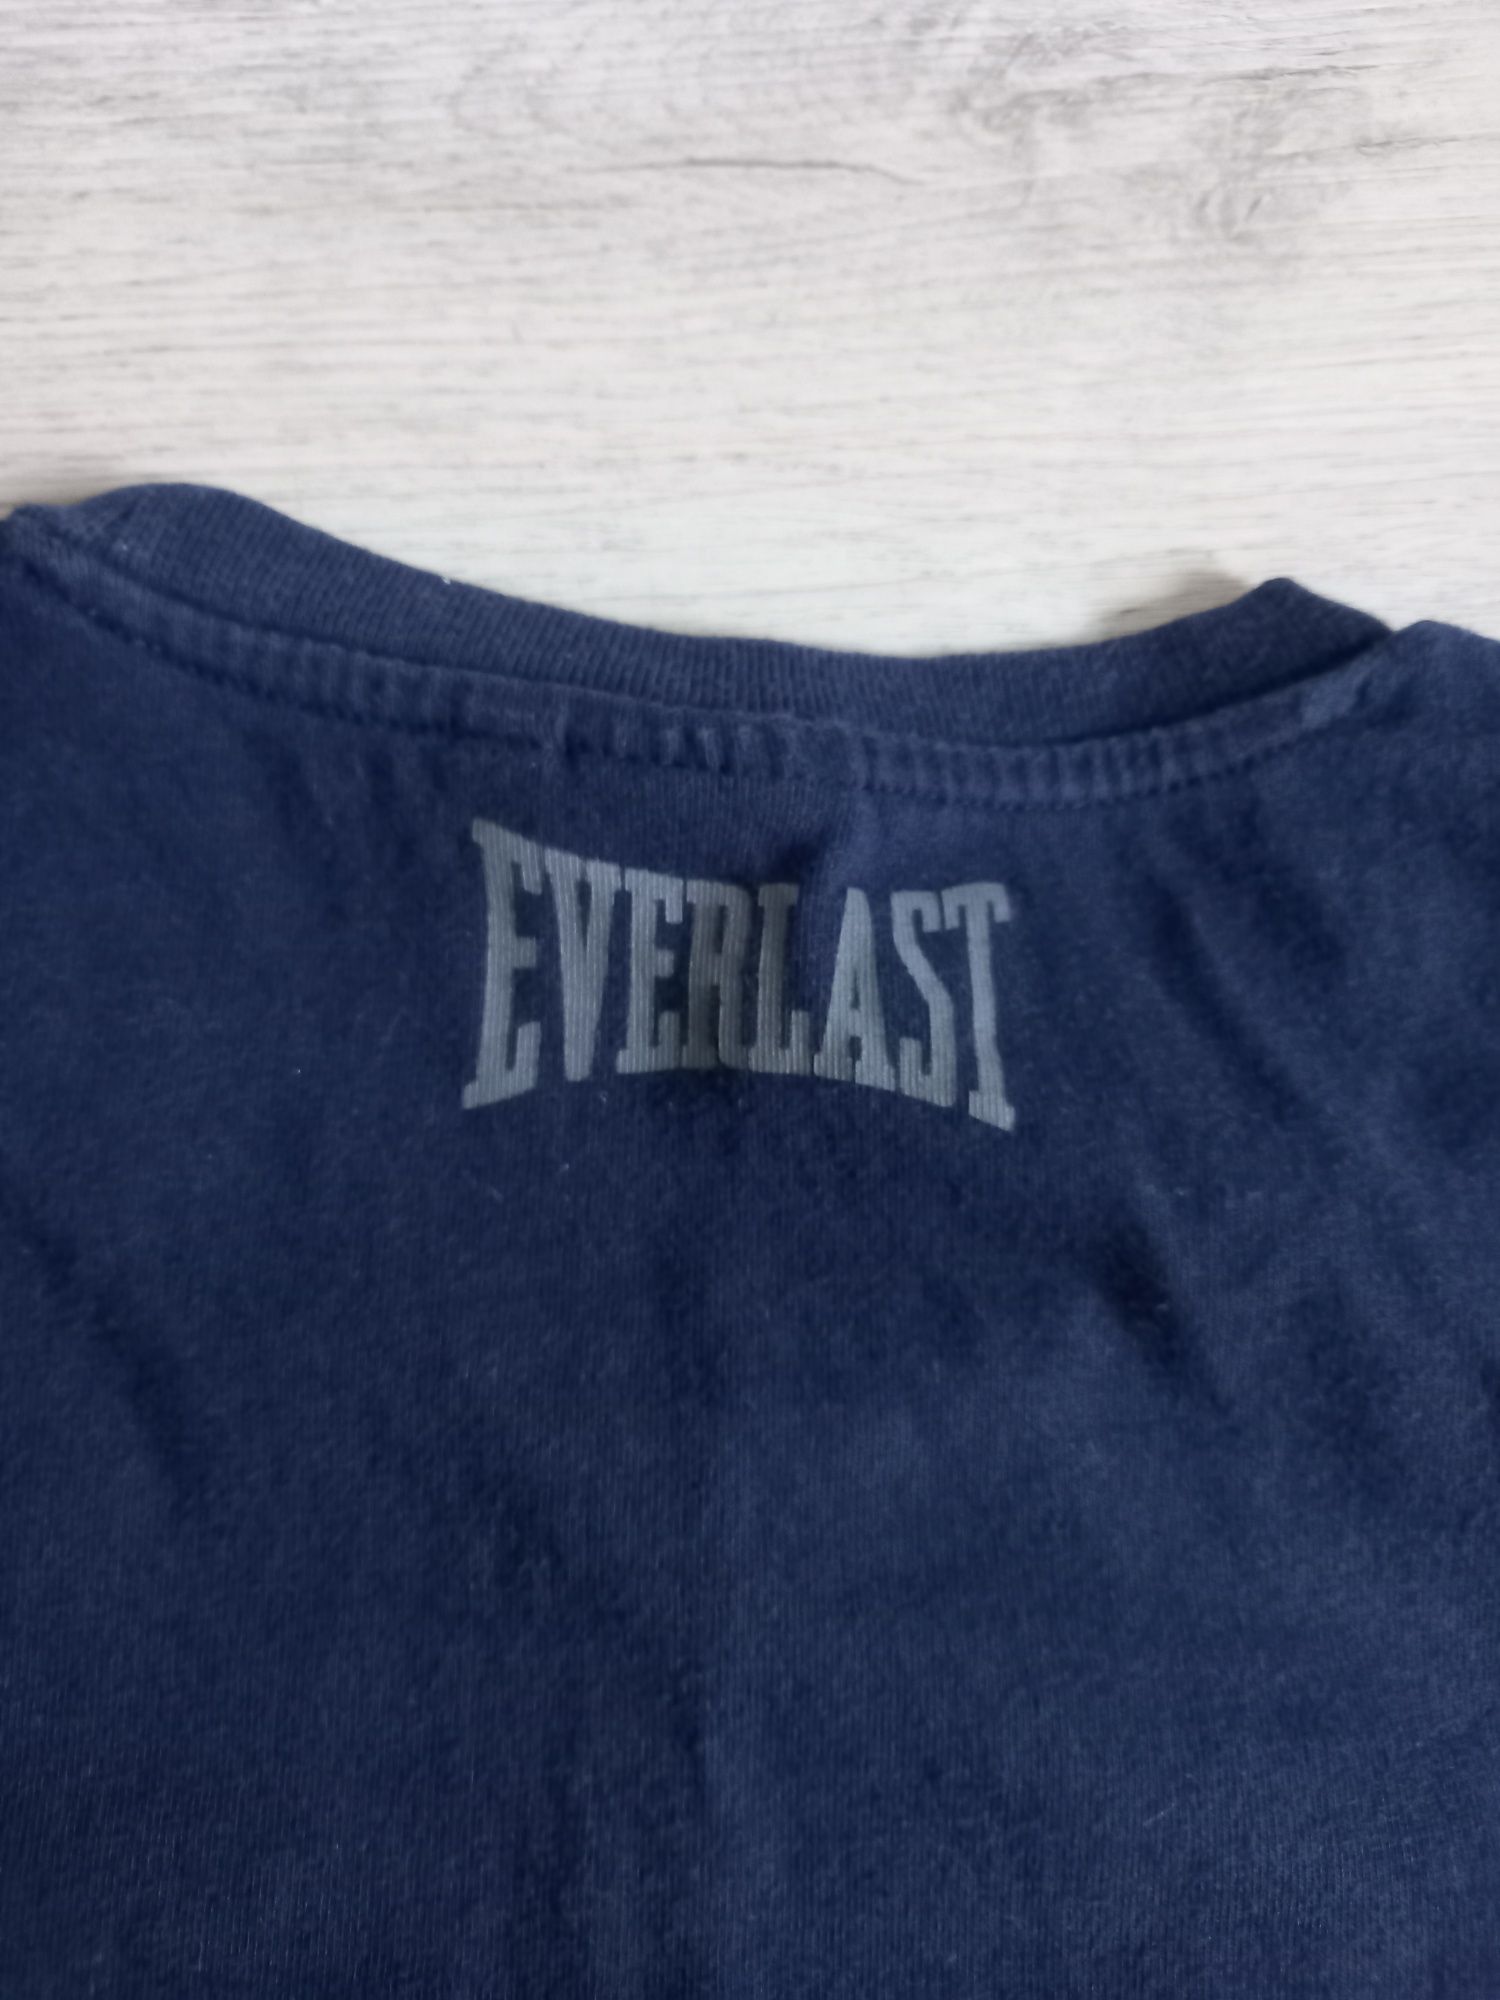 Everlast koszulka T-shirt męski granatowy rozmiar M